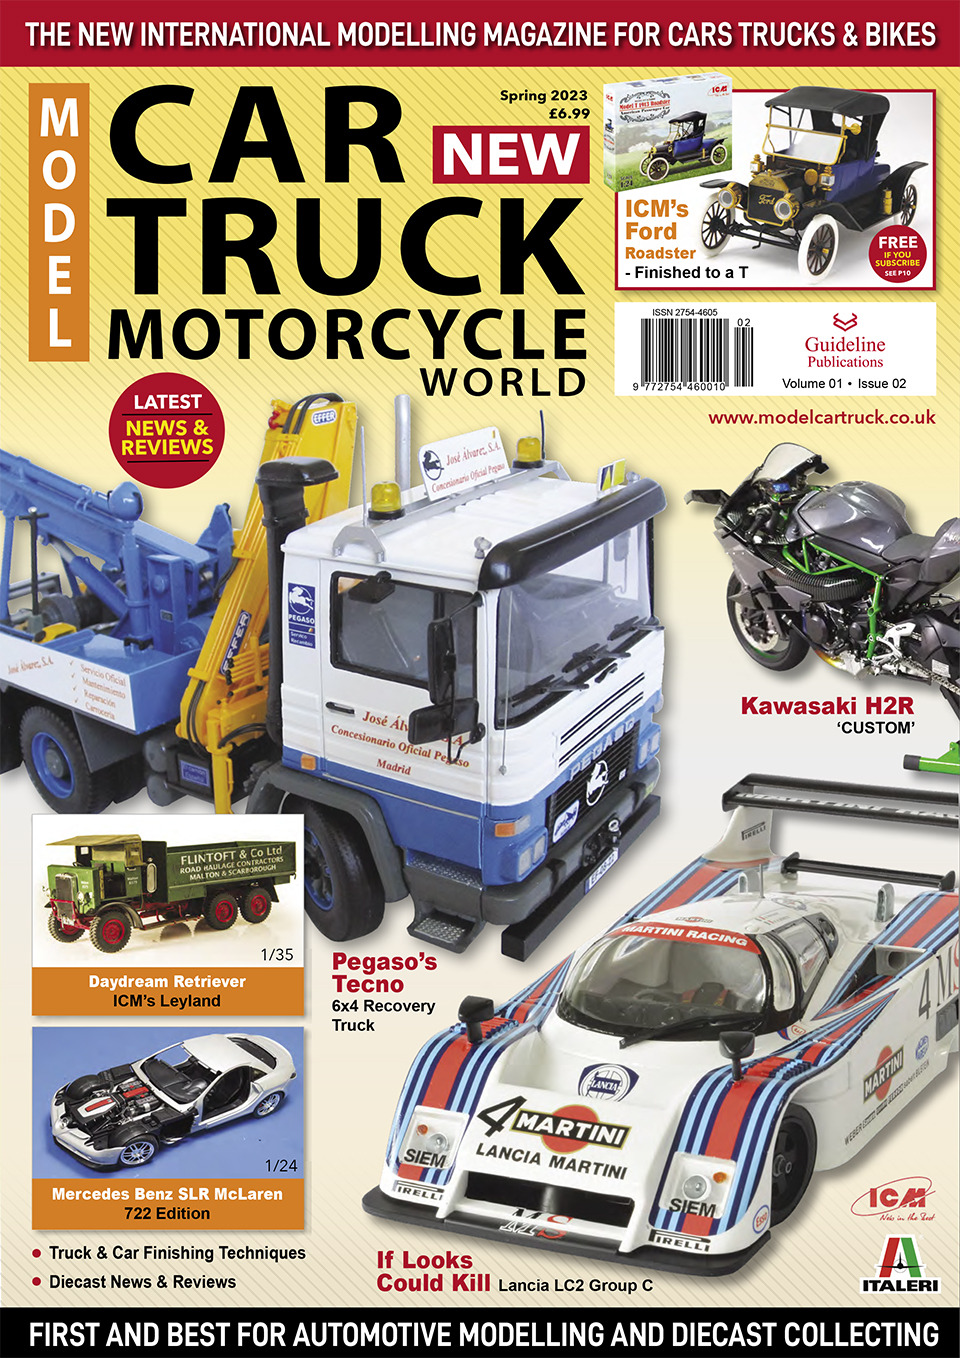 NEW Model Car Truck Motorcycle World